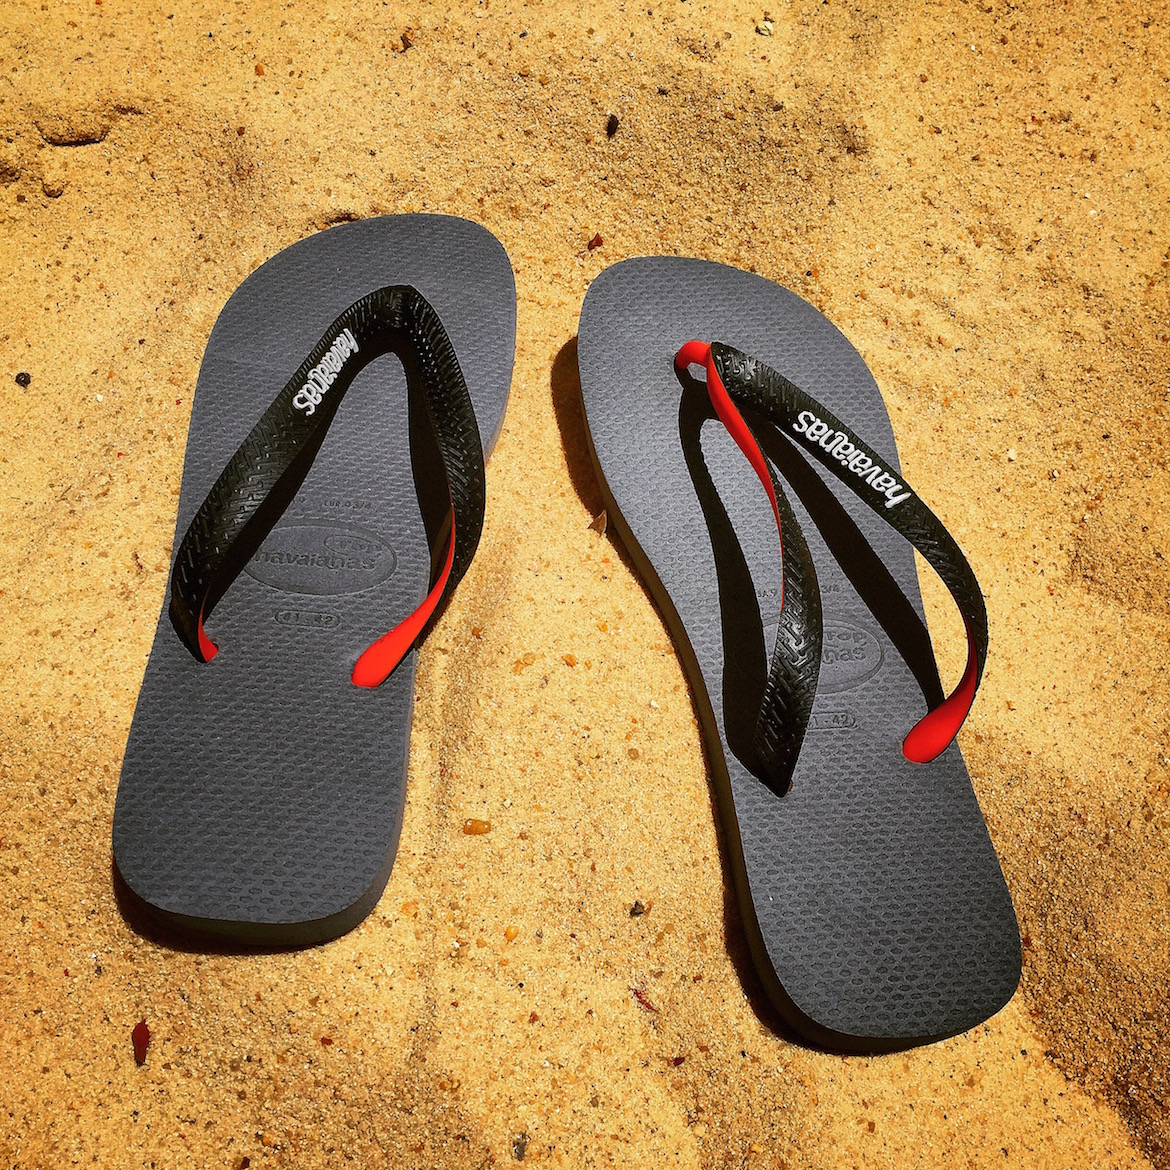 Wearing Havaianas flip-flops & my #summer2015 mood...